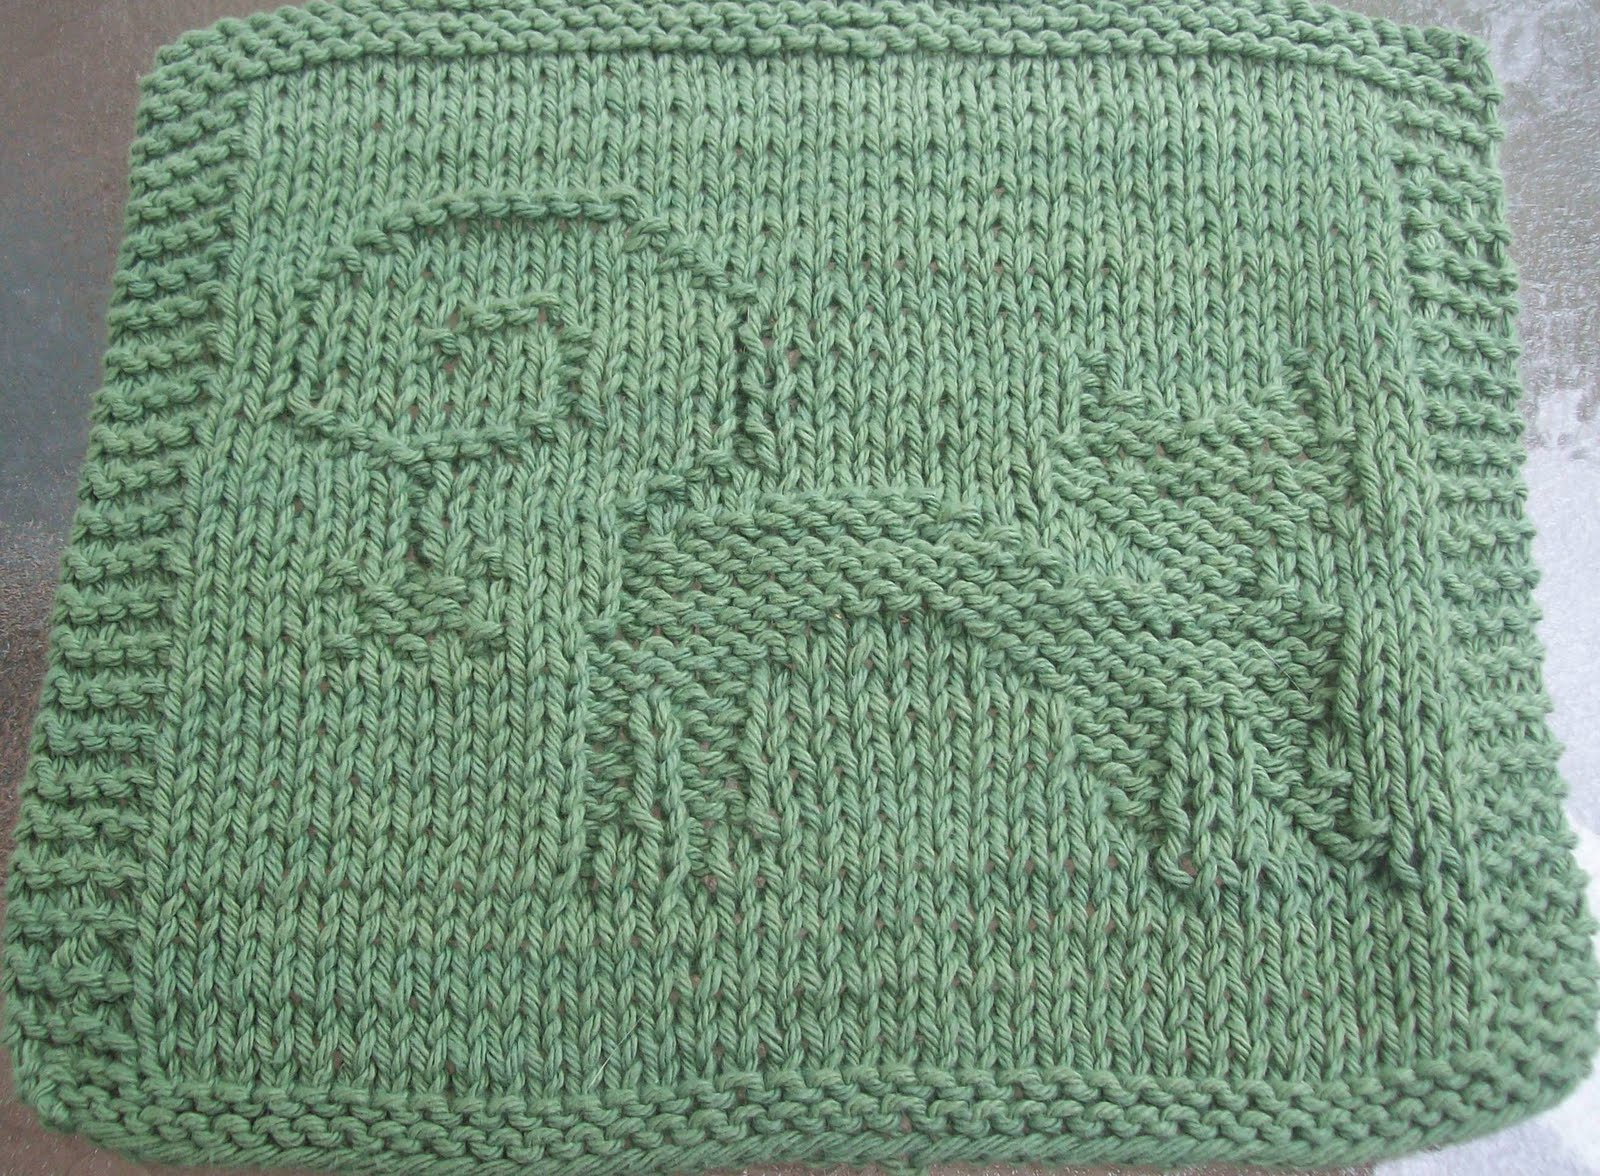 Spider Knitting Pattern Digknitty Designs Cat With Spider Knit Dishcloth Pattern